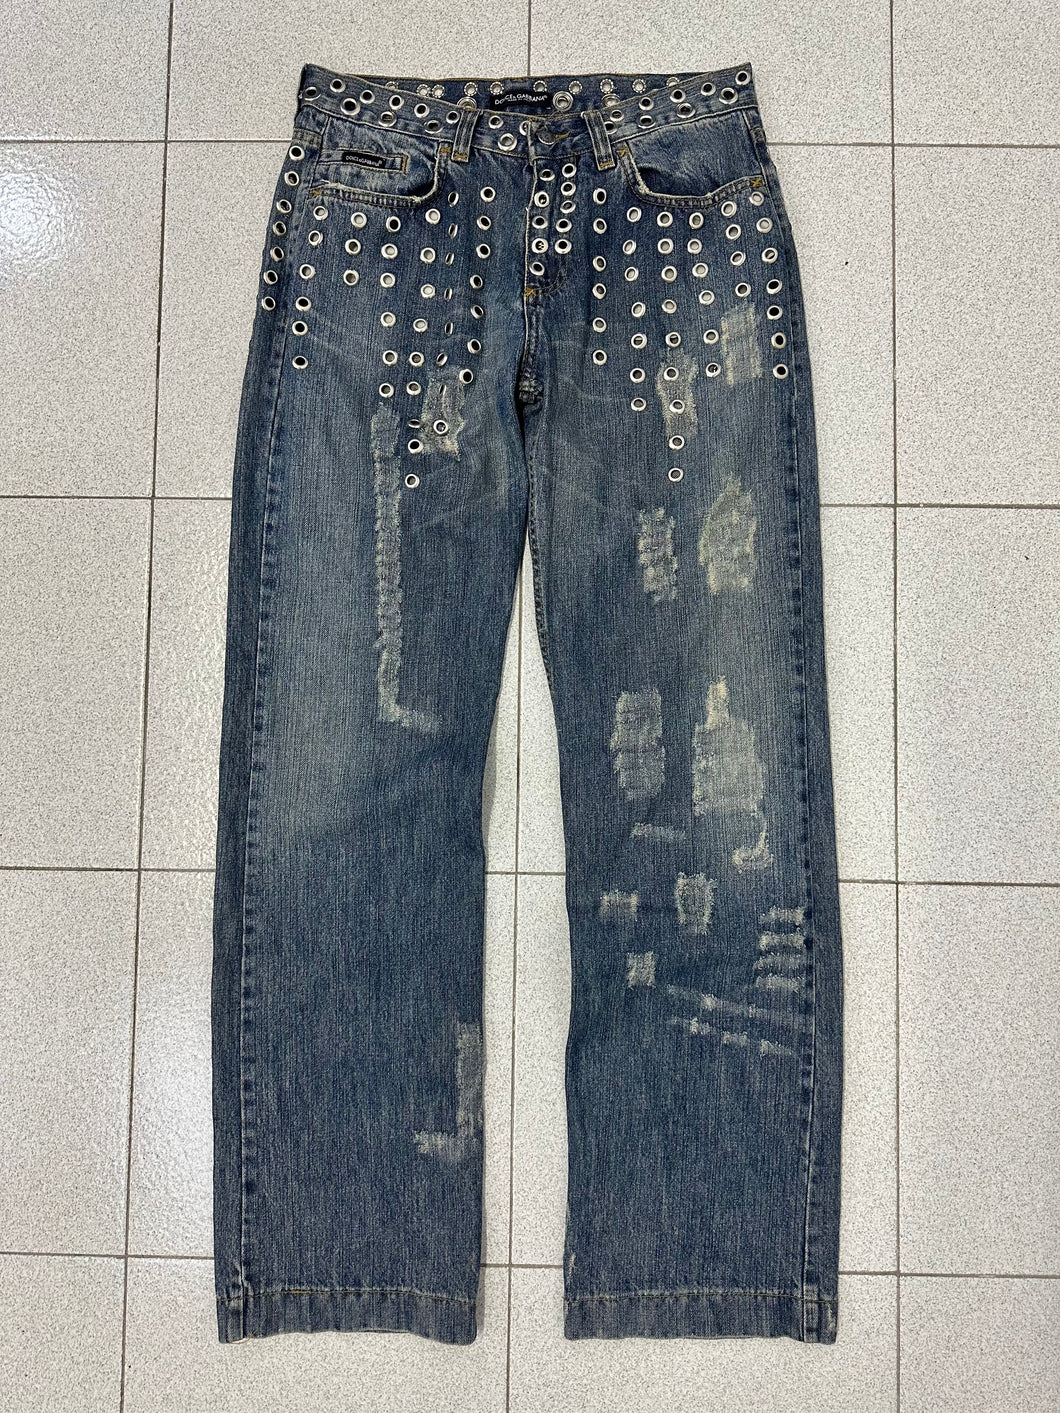 SS2006 Dolce & Gabbana eyelet studded holed jeans